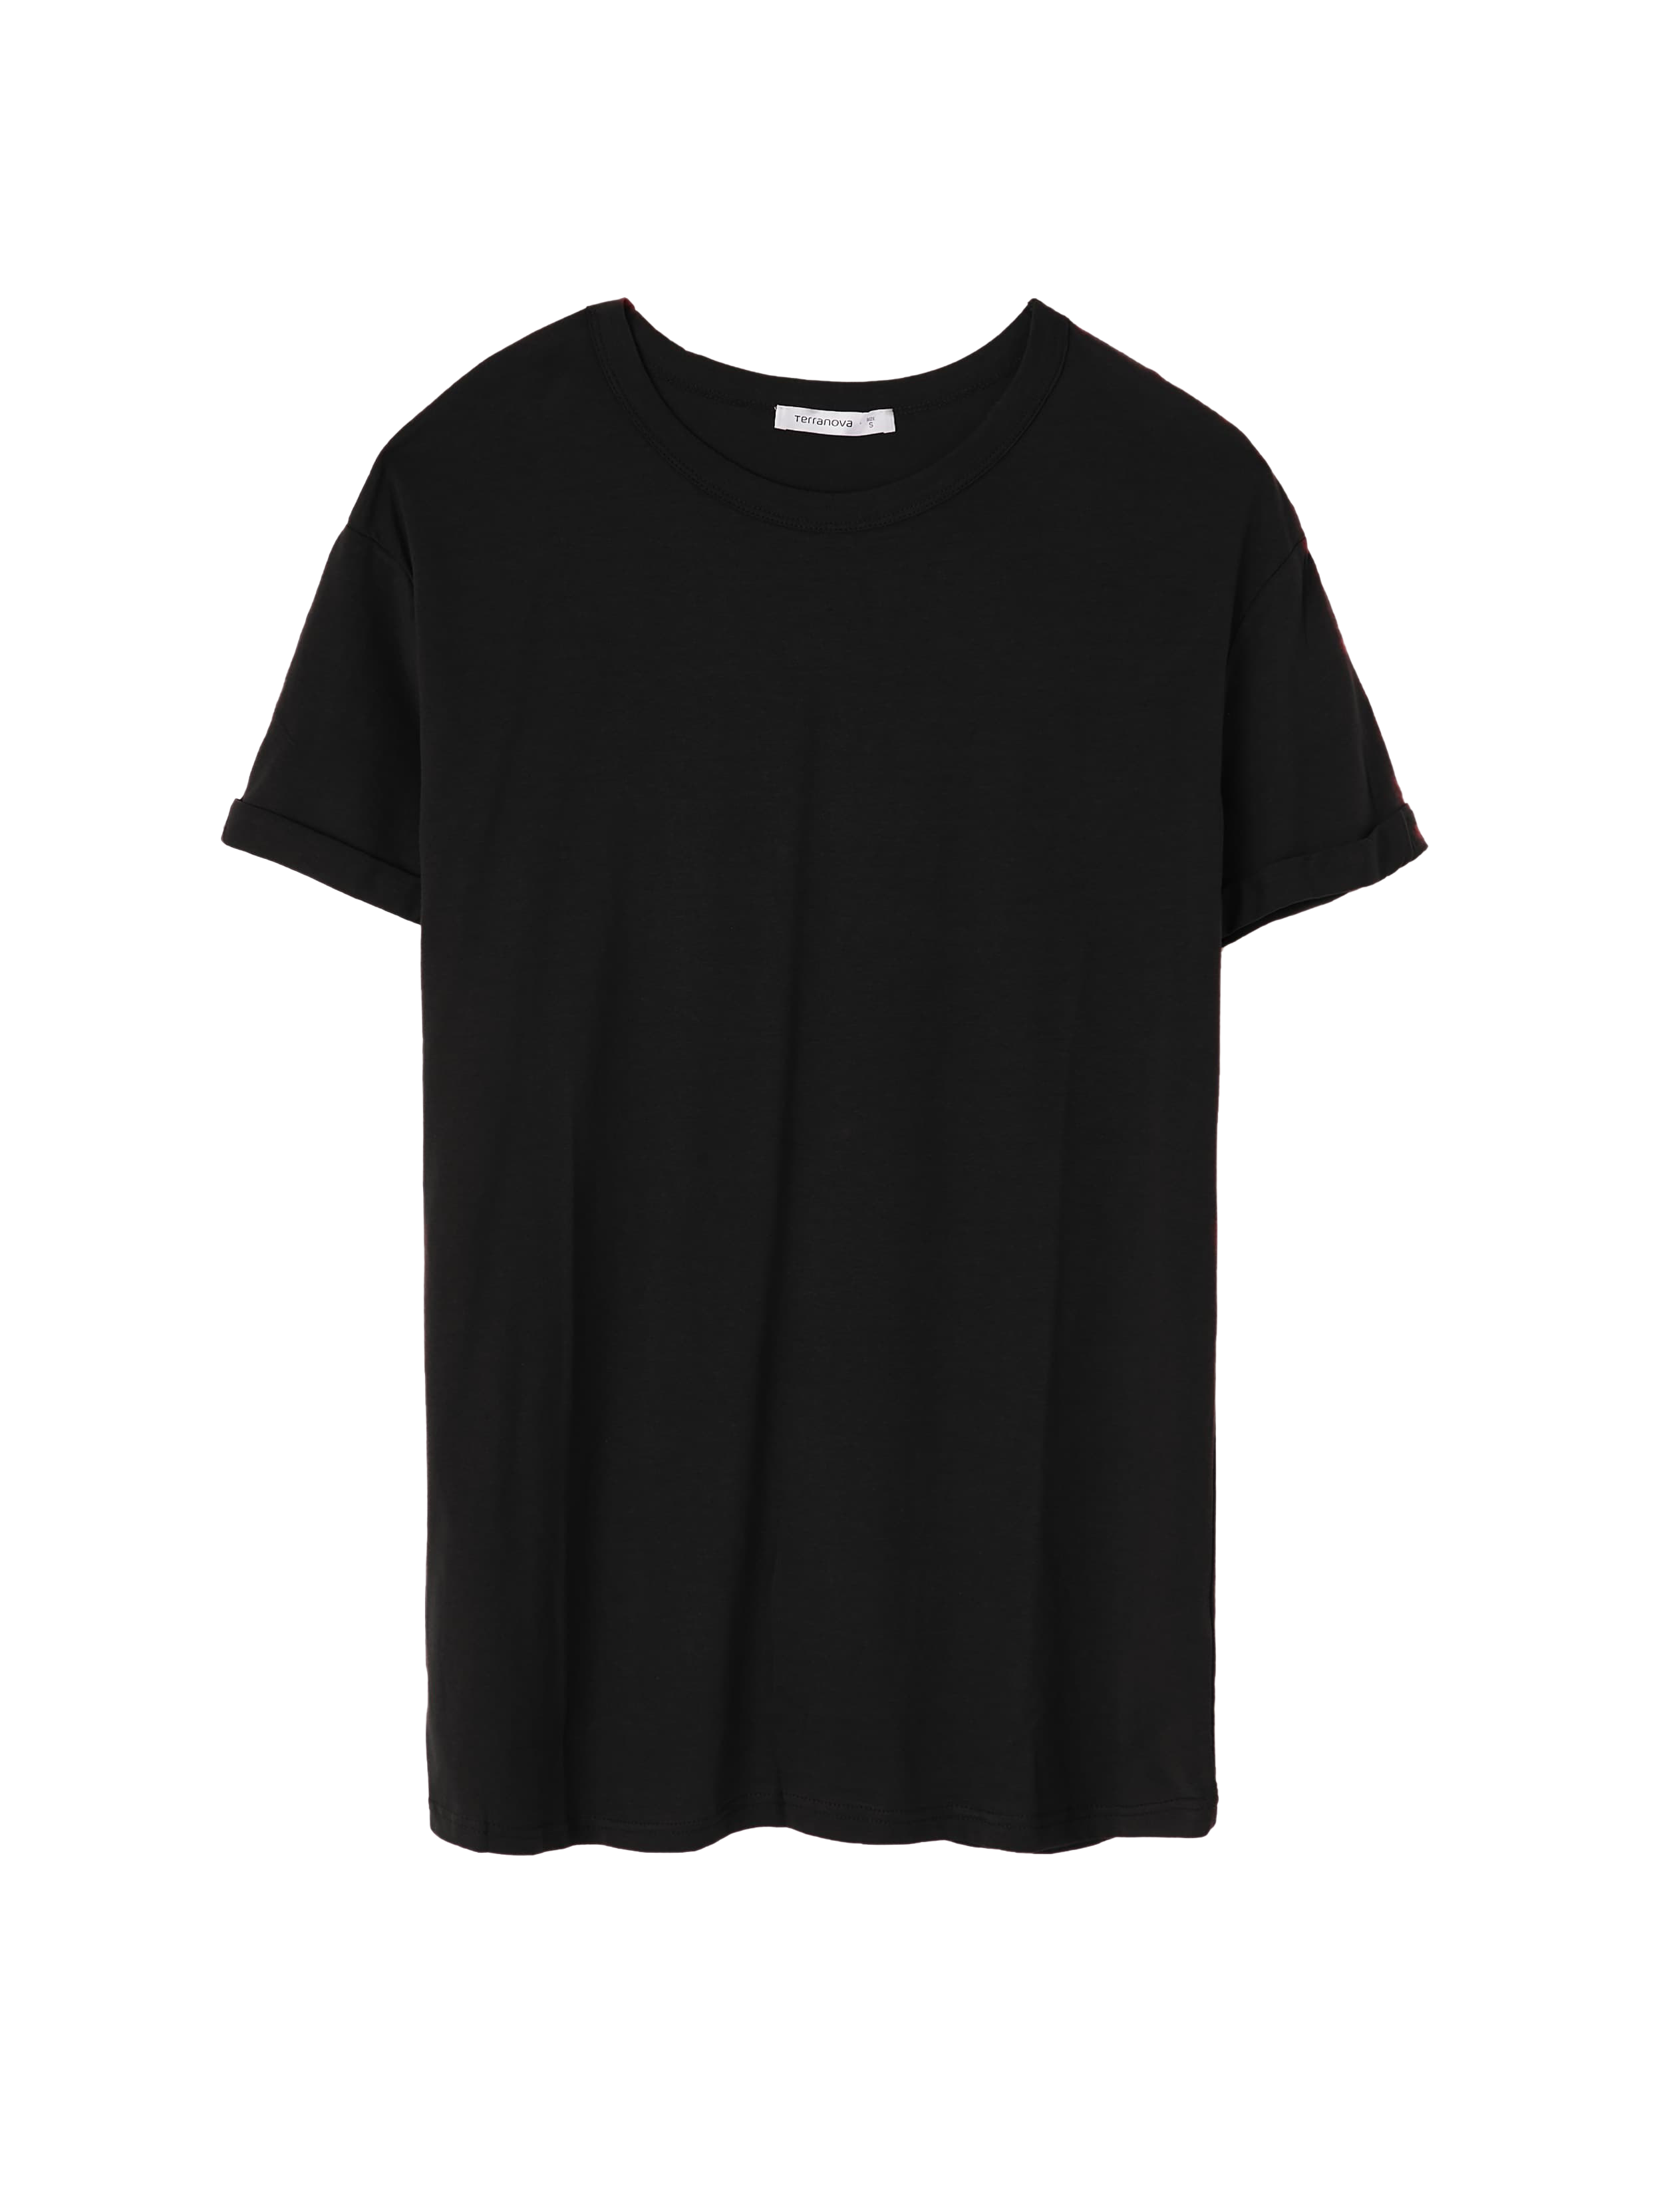 Freestyle: High Resolution Plain Black T Shirt Png